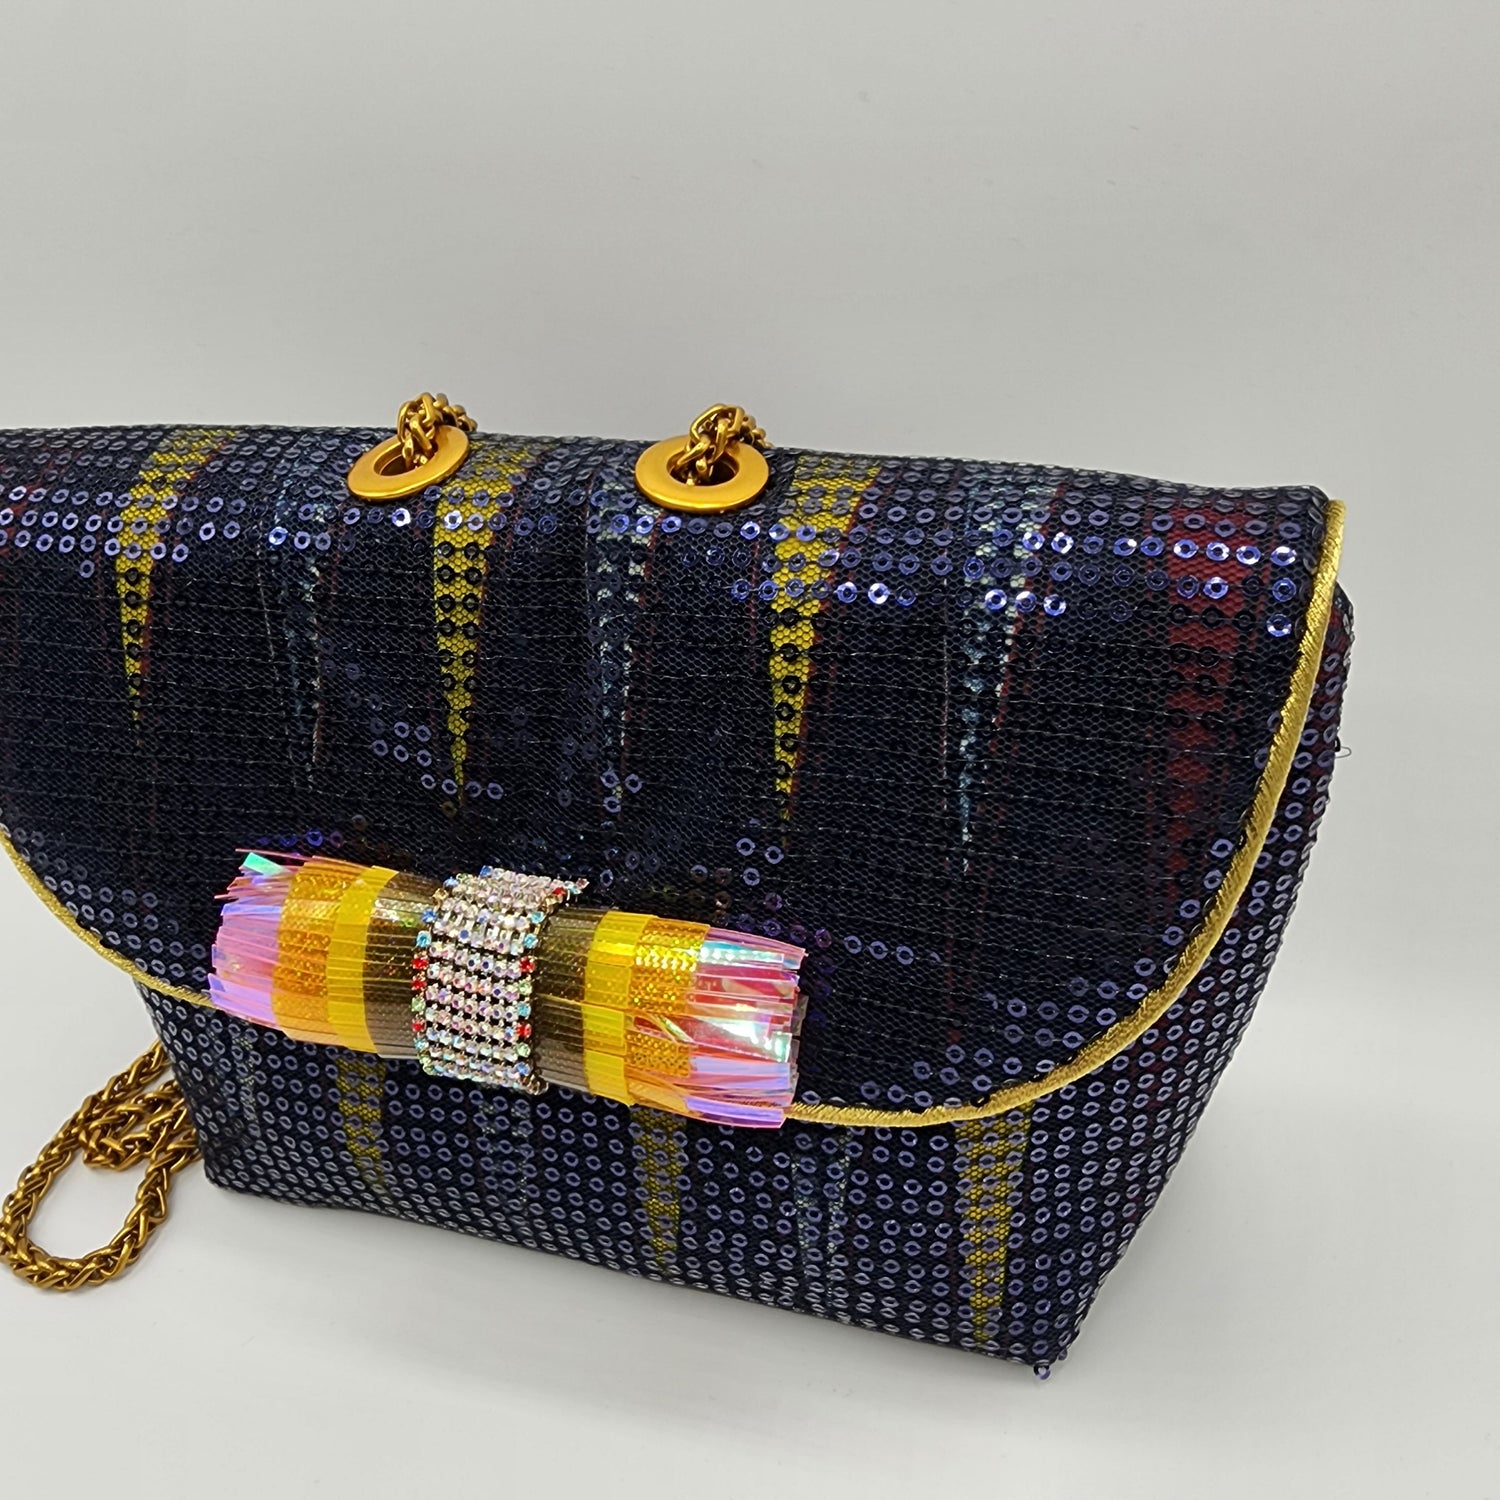 Black Shiny Shoulder Bag | Luxury Handbags For Women | Handcrafted